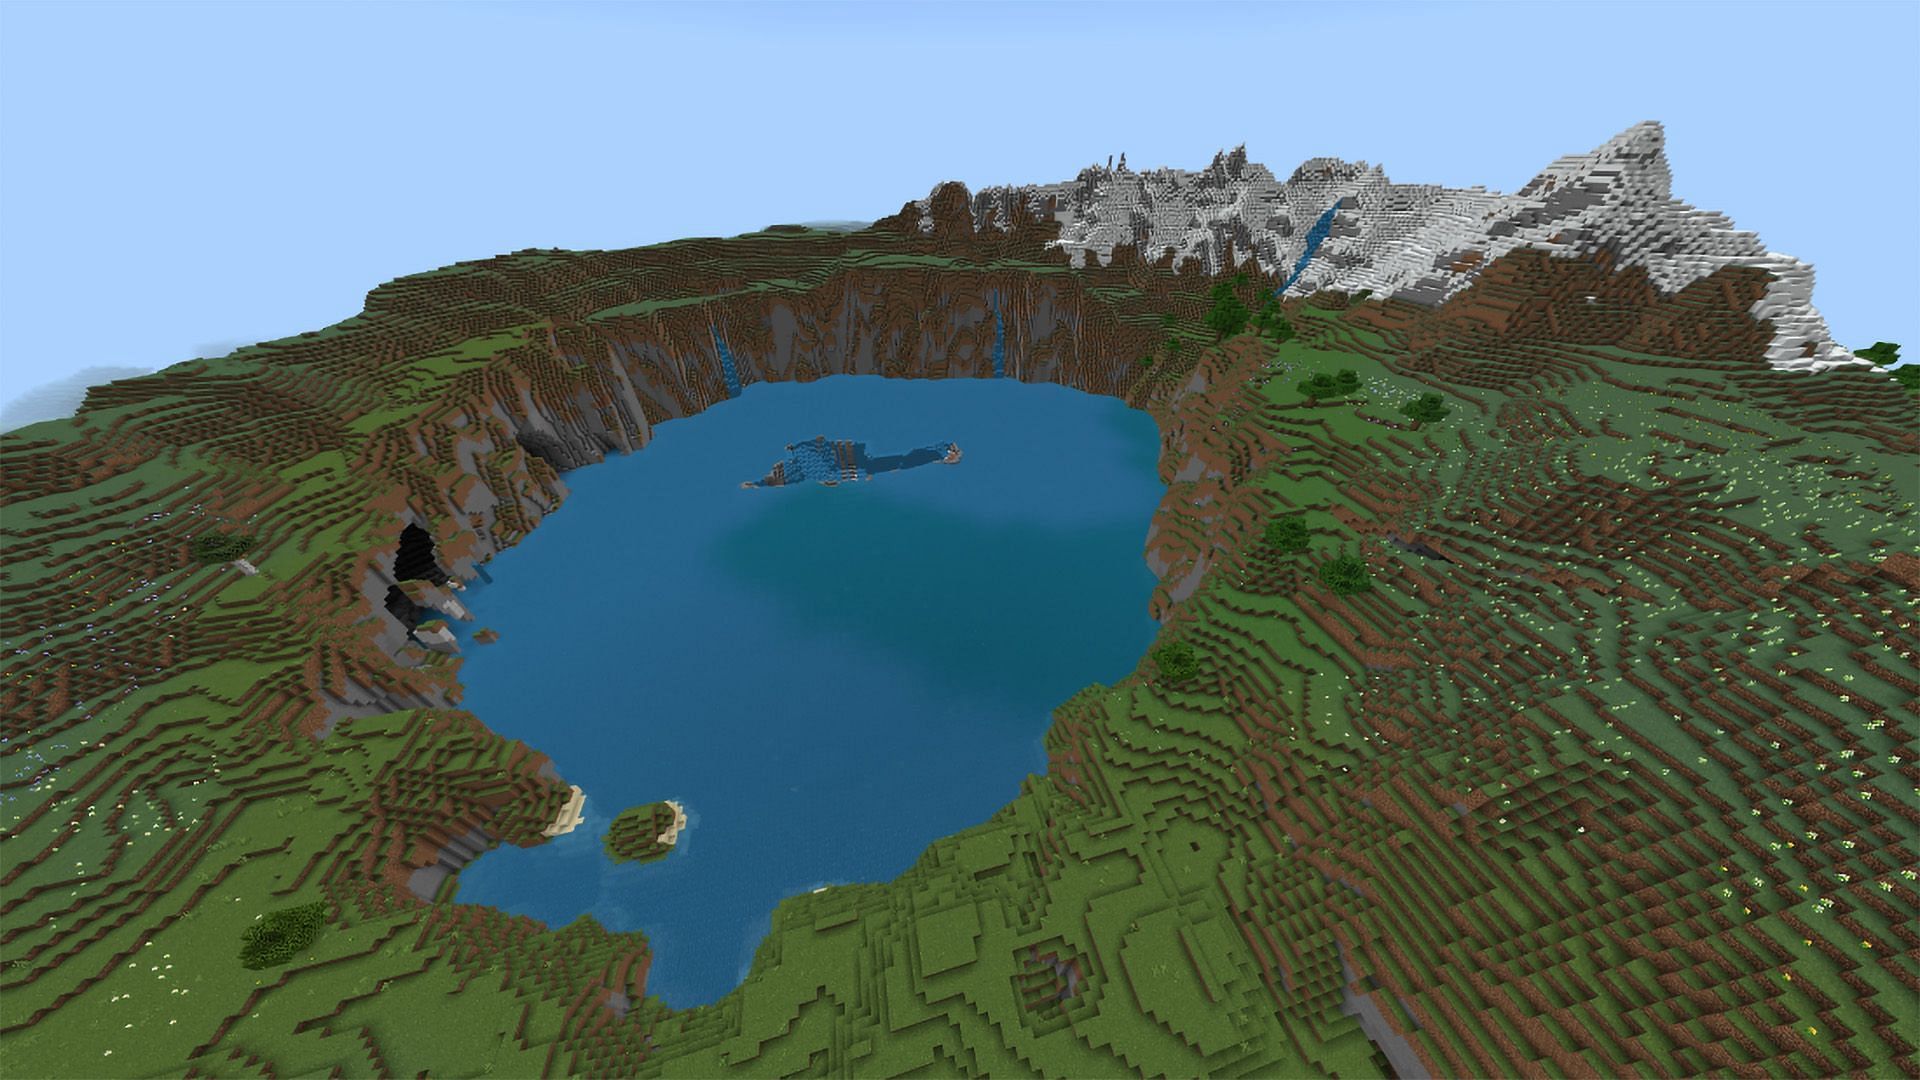 The bizarre sinkhole runs deep through the lands of Minecraft (Image via Mojang)